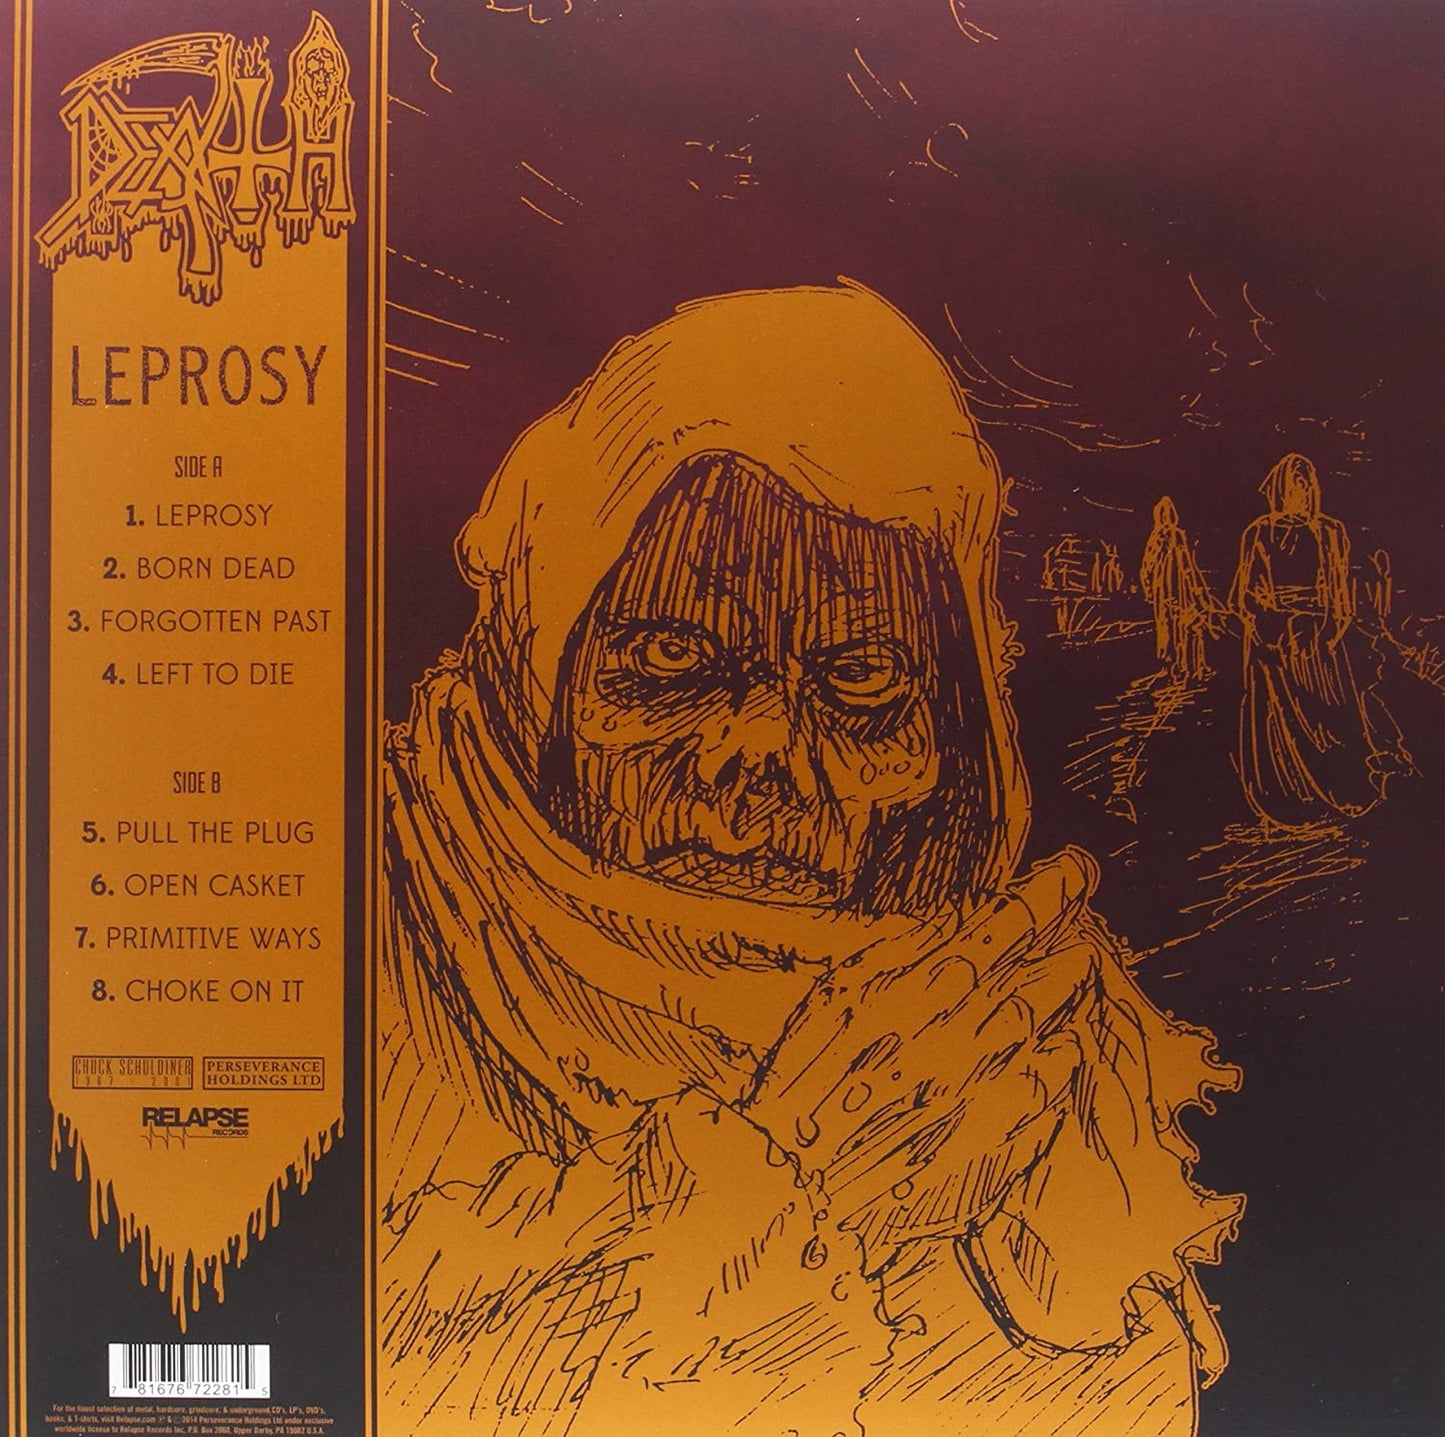 Death/Leprosy [LP]